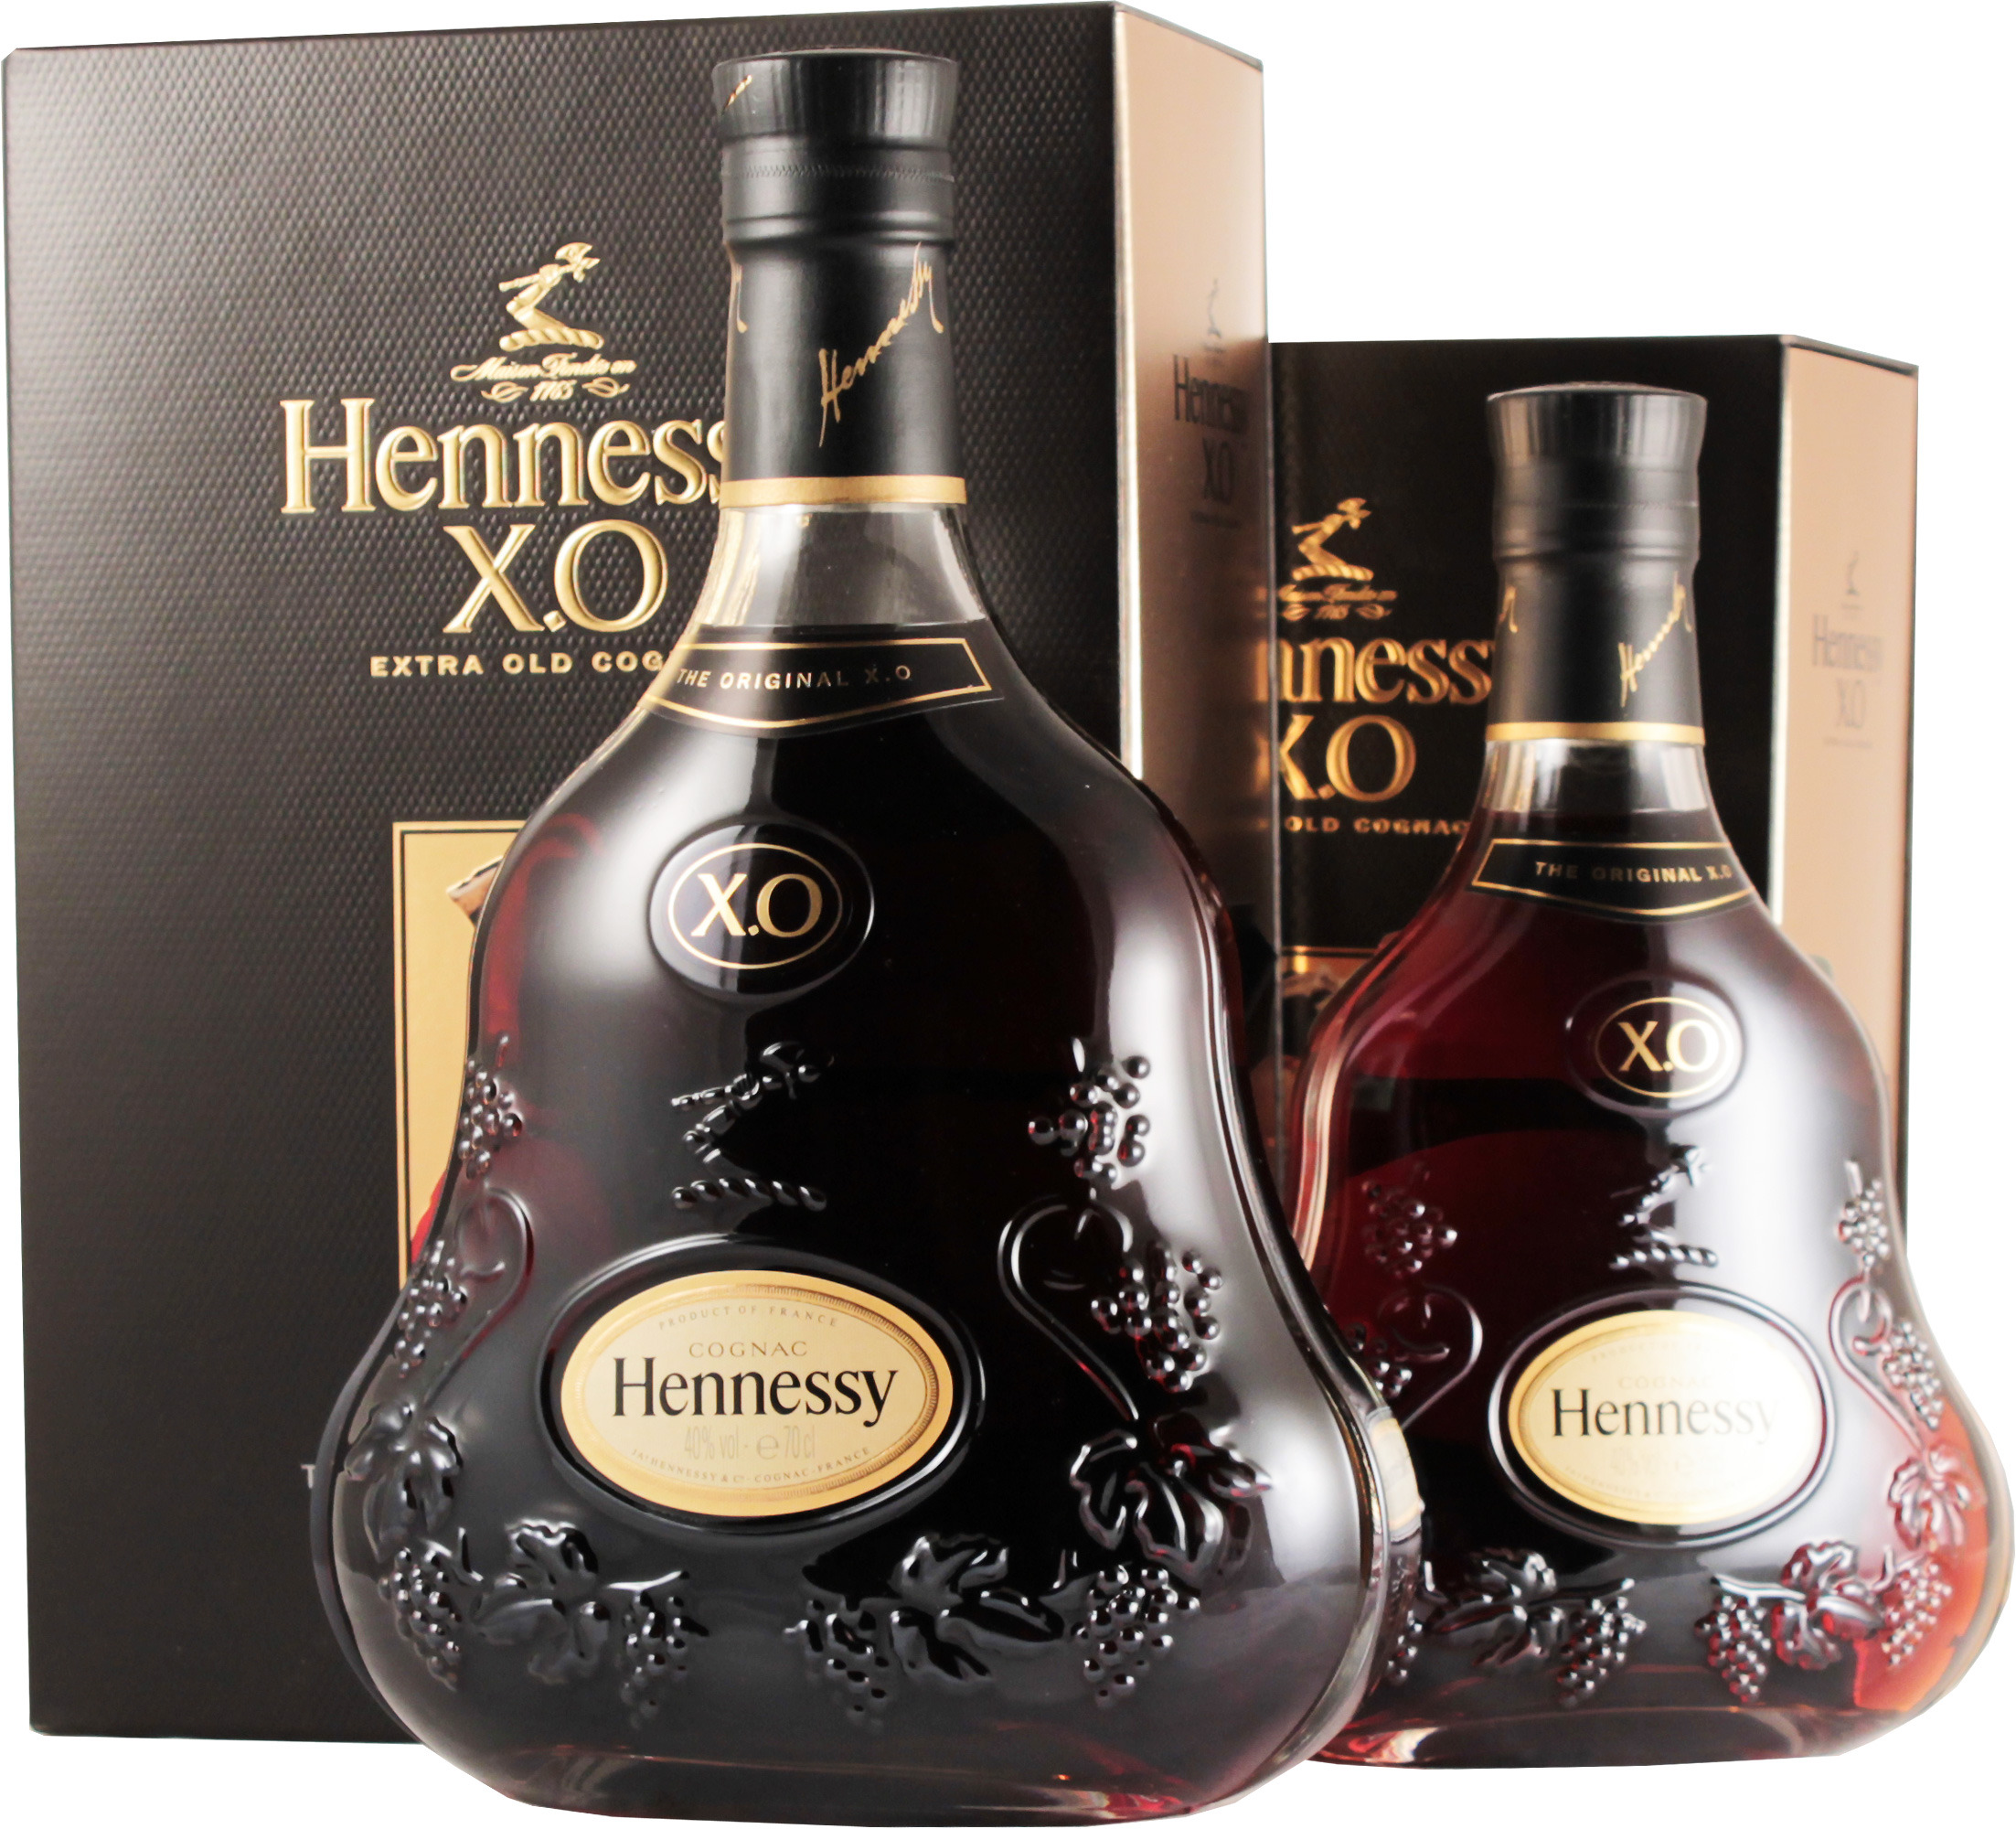 Hennessy cognac цена. Французский коньяк Хеннесси. Коньяк Хеннесси Хо. Коньяк Hennessy XO 0.5 Cognac. Cognac x.o Hennessy коньяк.